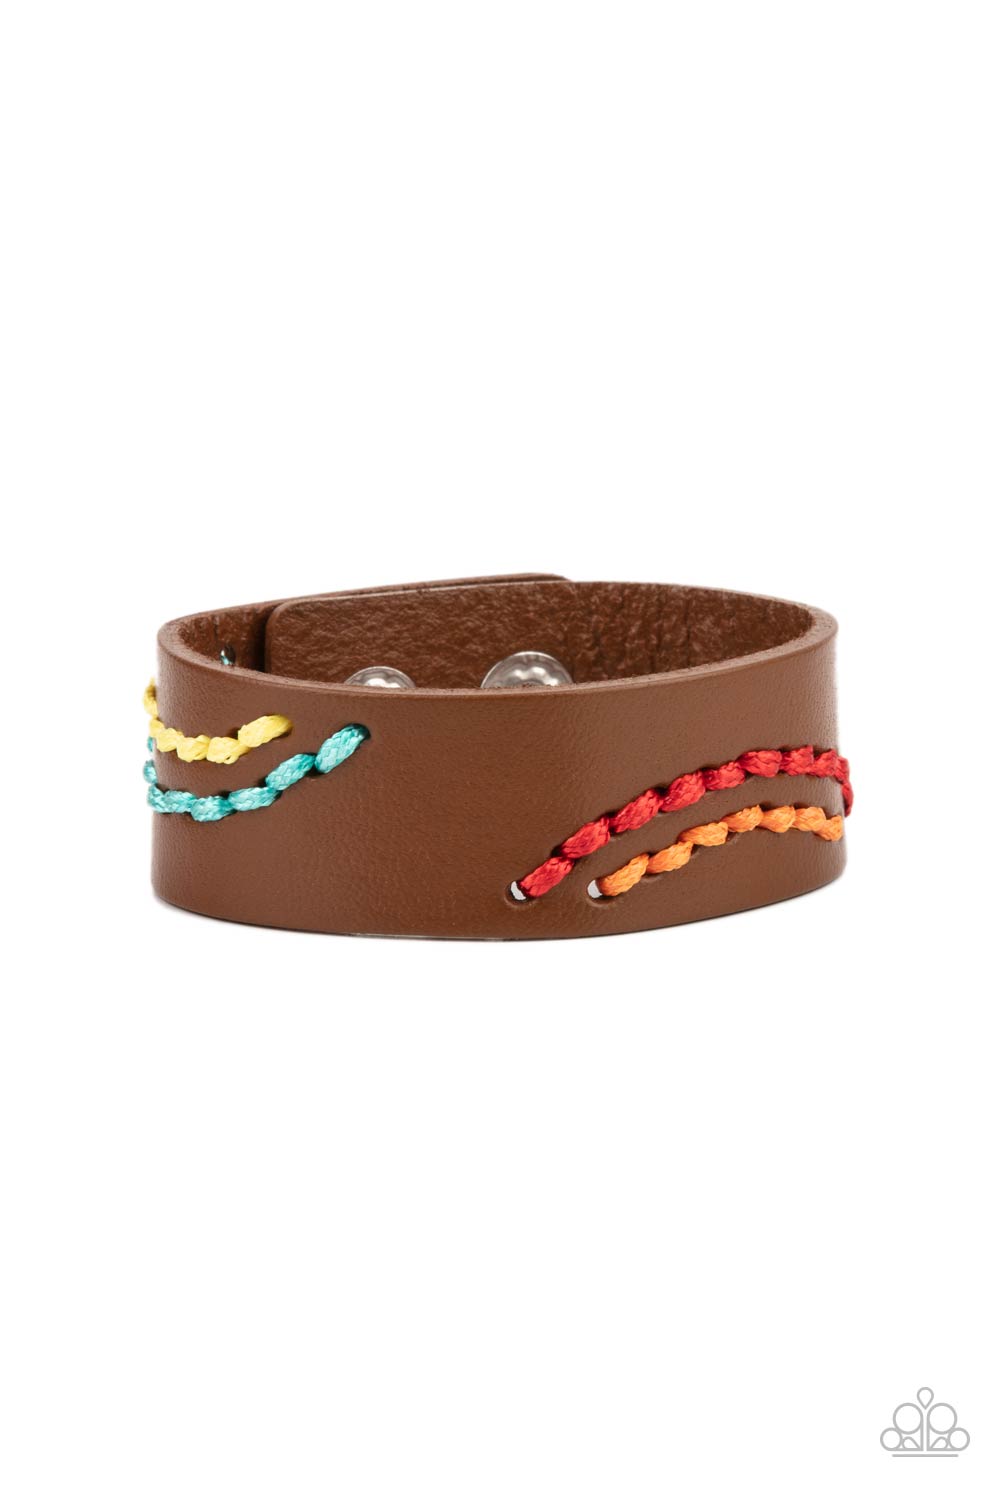 Harmonic Horizons - Paparazzi - Multi Colored Stitched Brown Leather Snap Bracelet